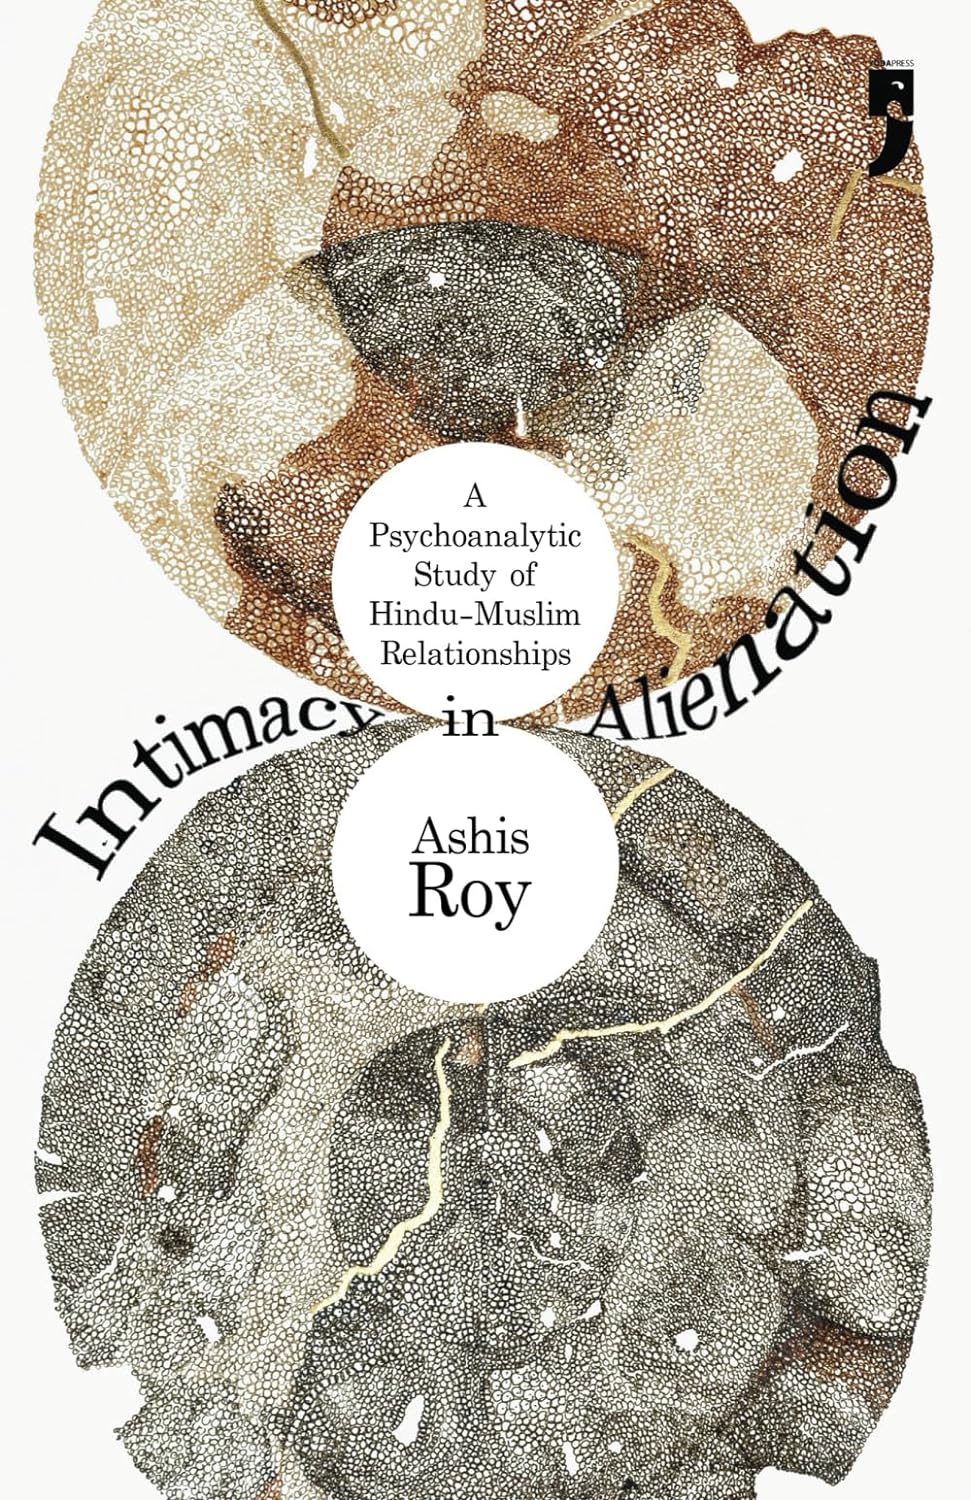 Intimacy in Alienation: A Psychoanalytic Study of Hindu-Muslim Relationships